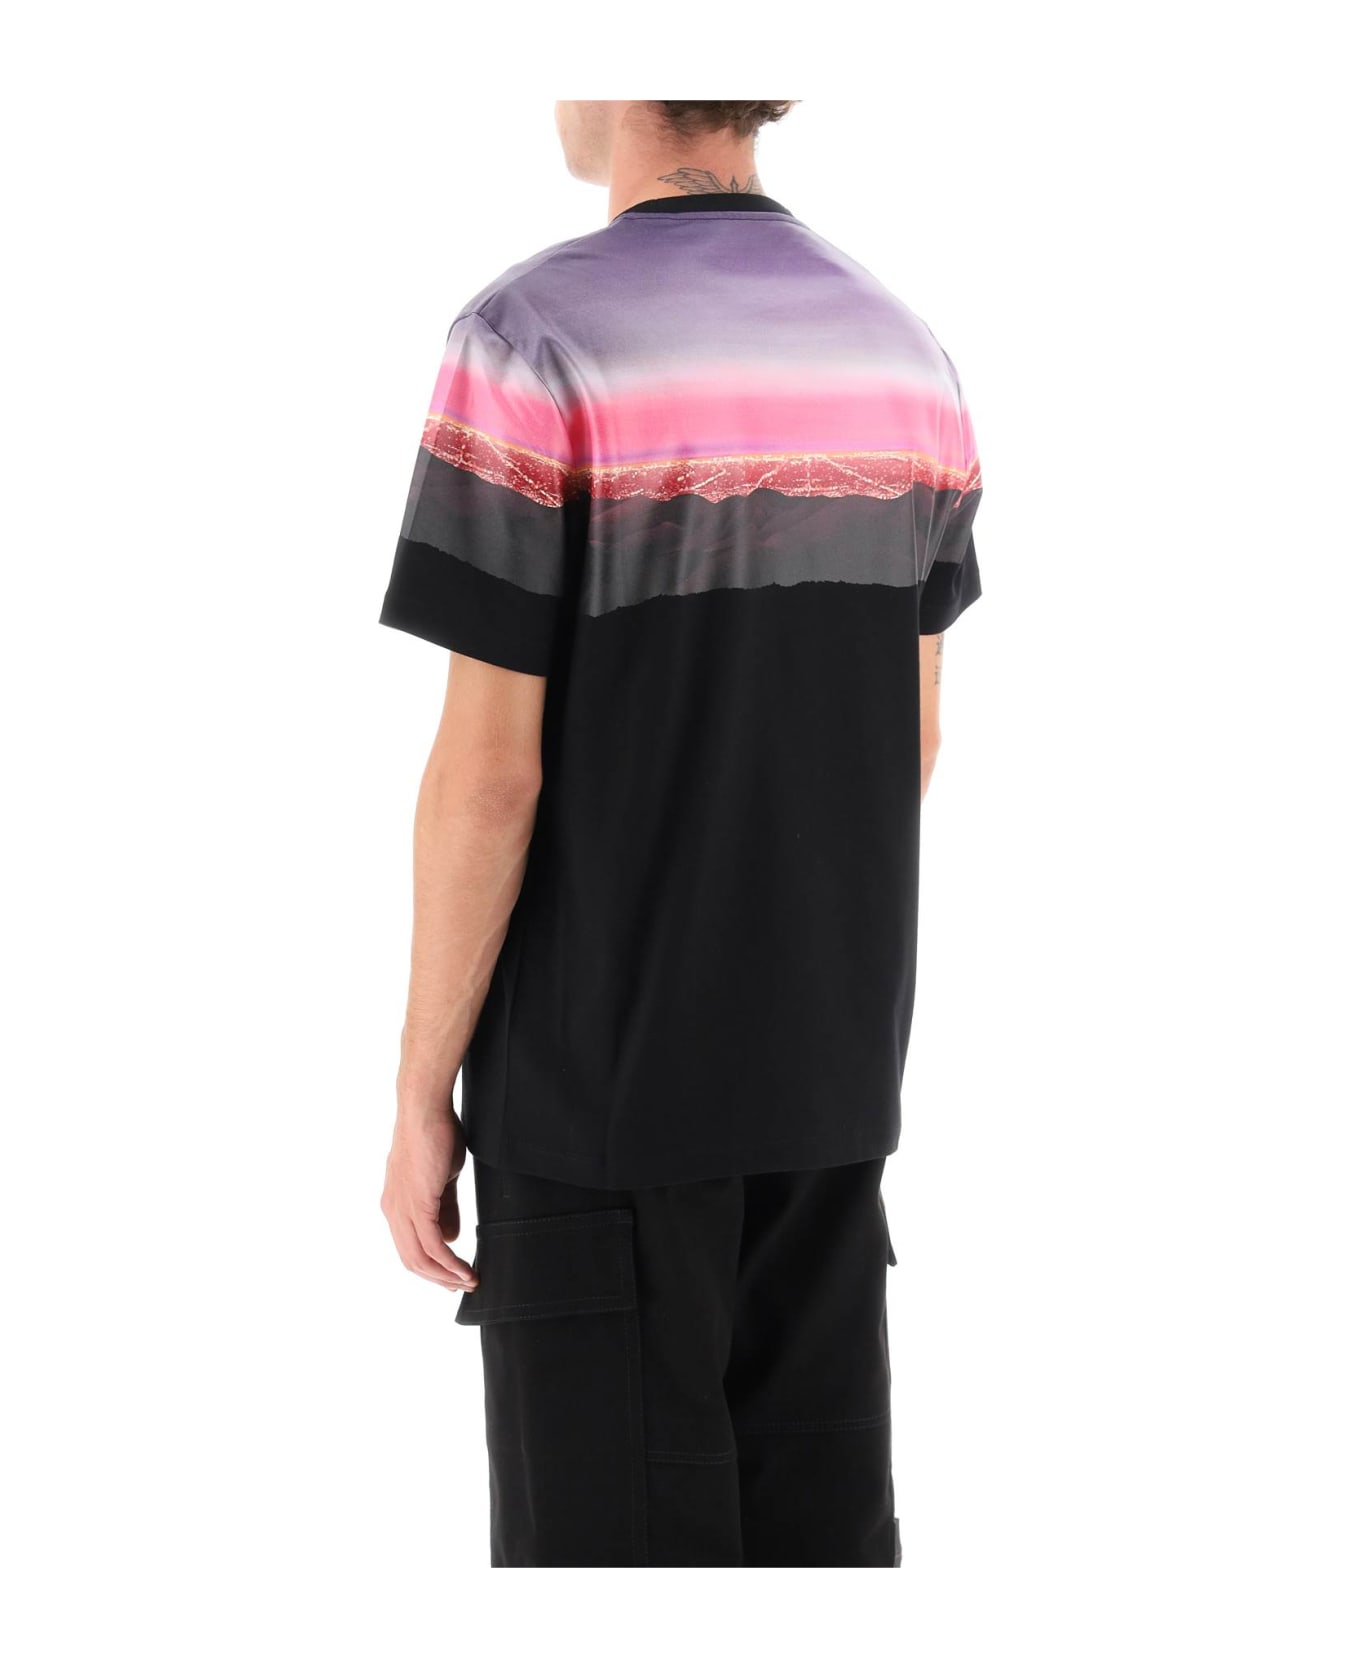 Versace Printed Cotton T-shirt - Black シャツ